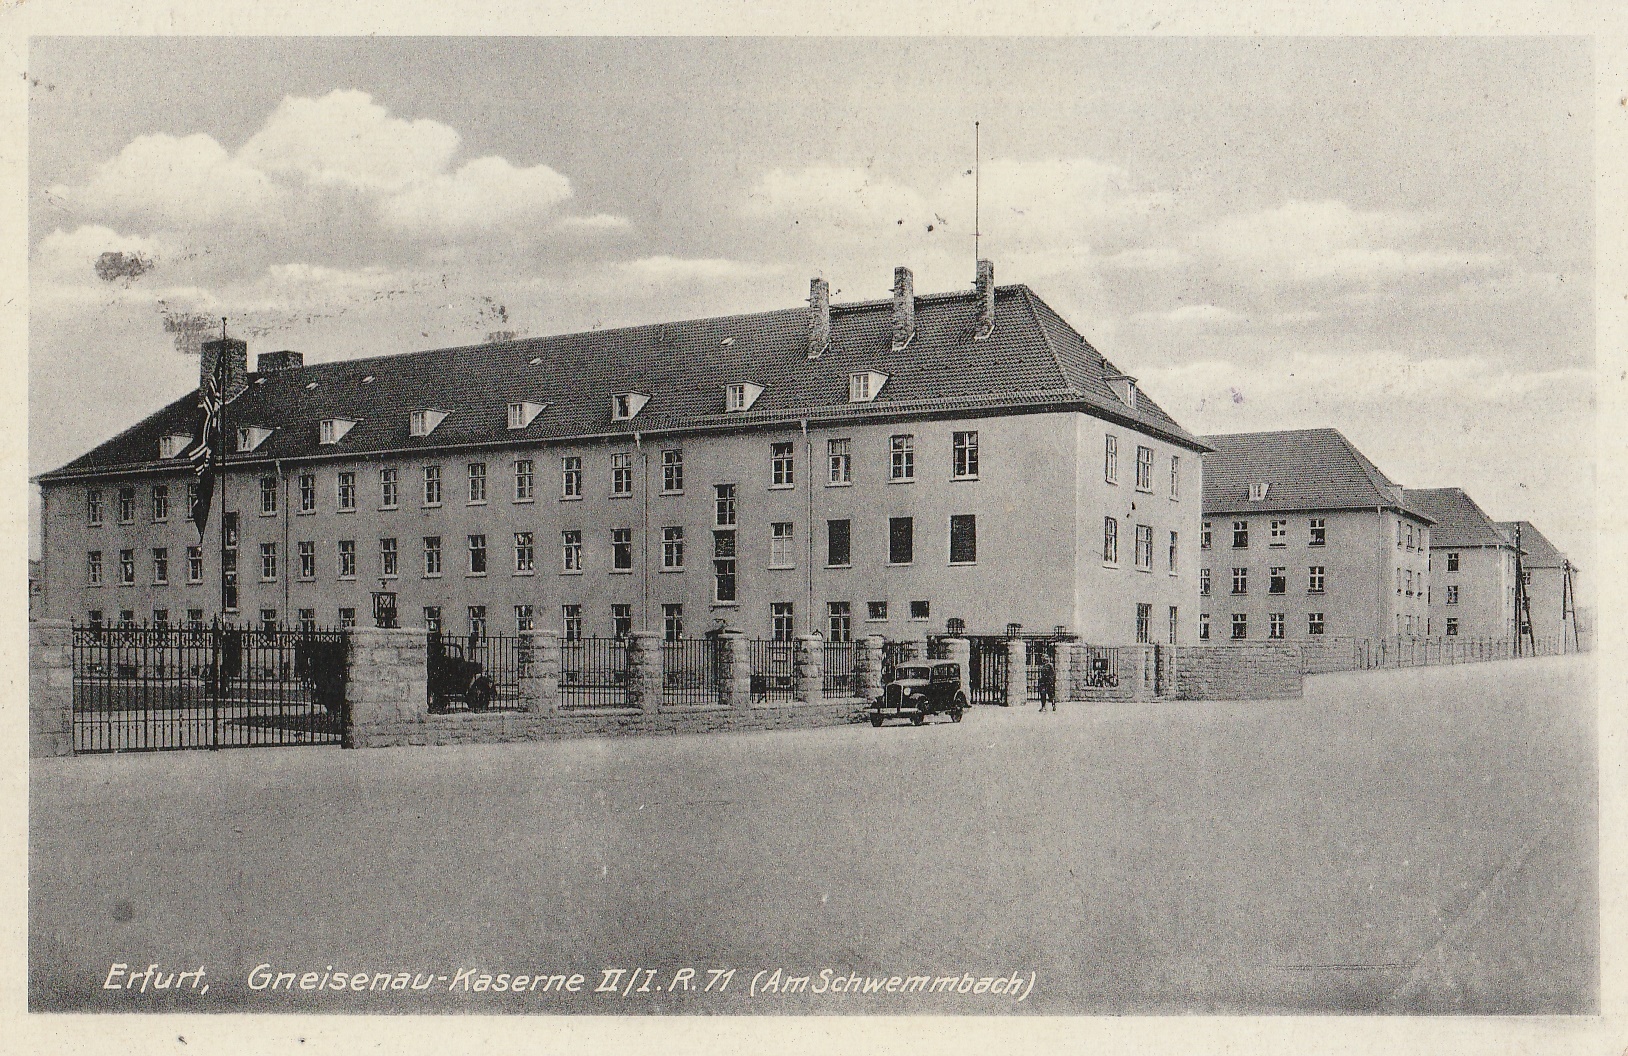 Erfurt Gneisenau Kaserne 1940